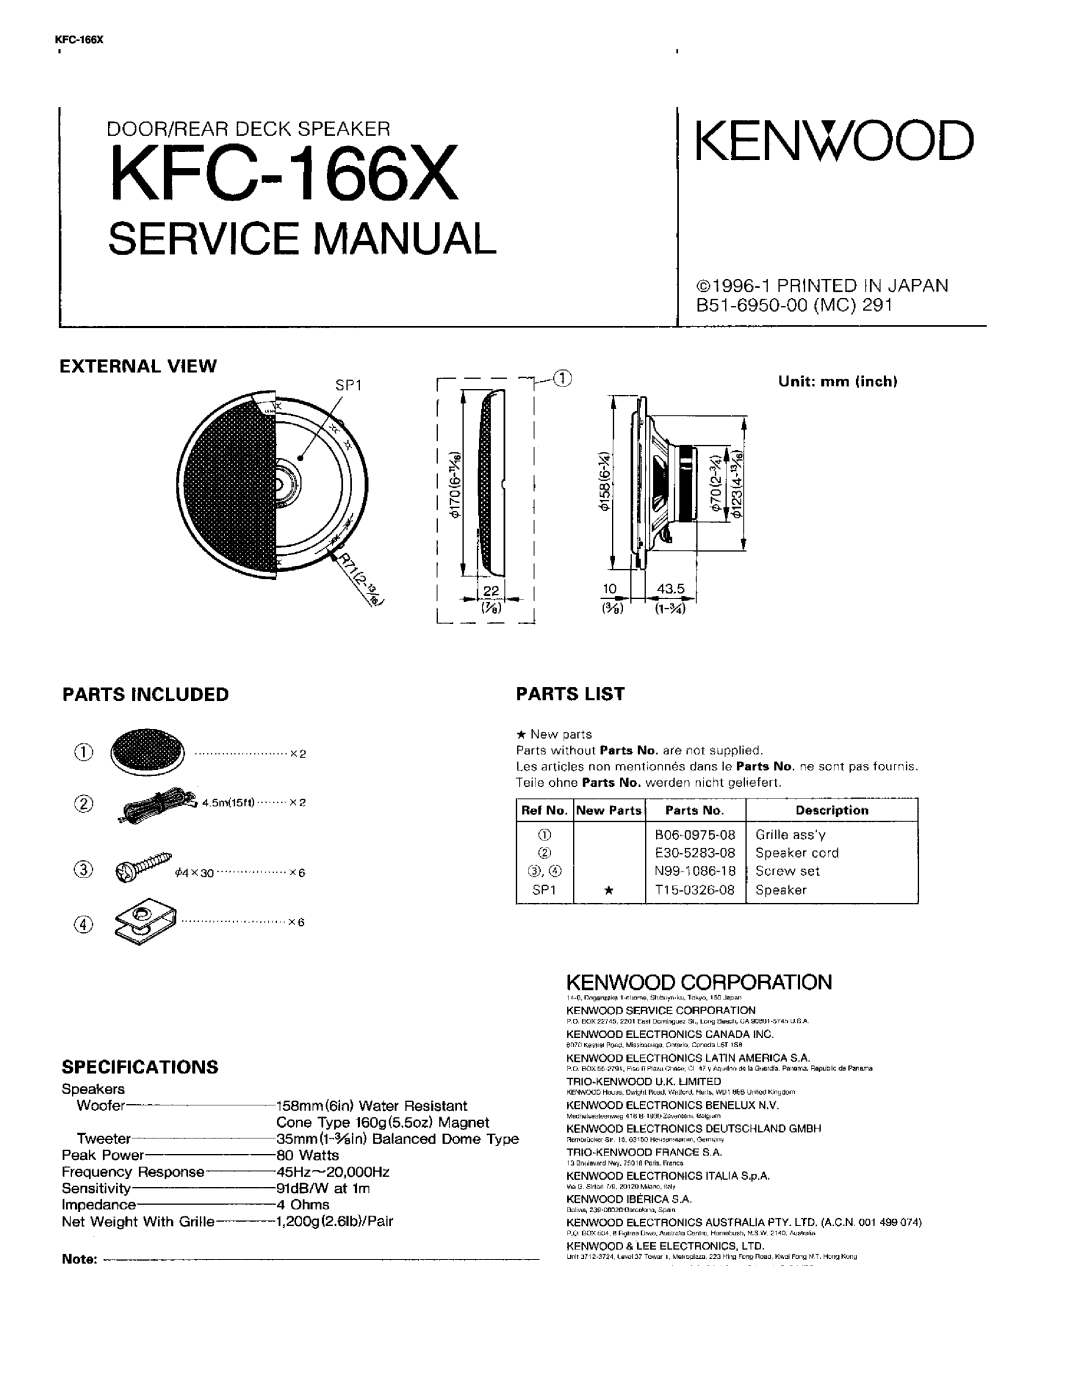 Kenwood KFC-166X manual 